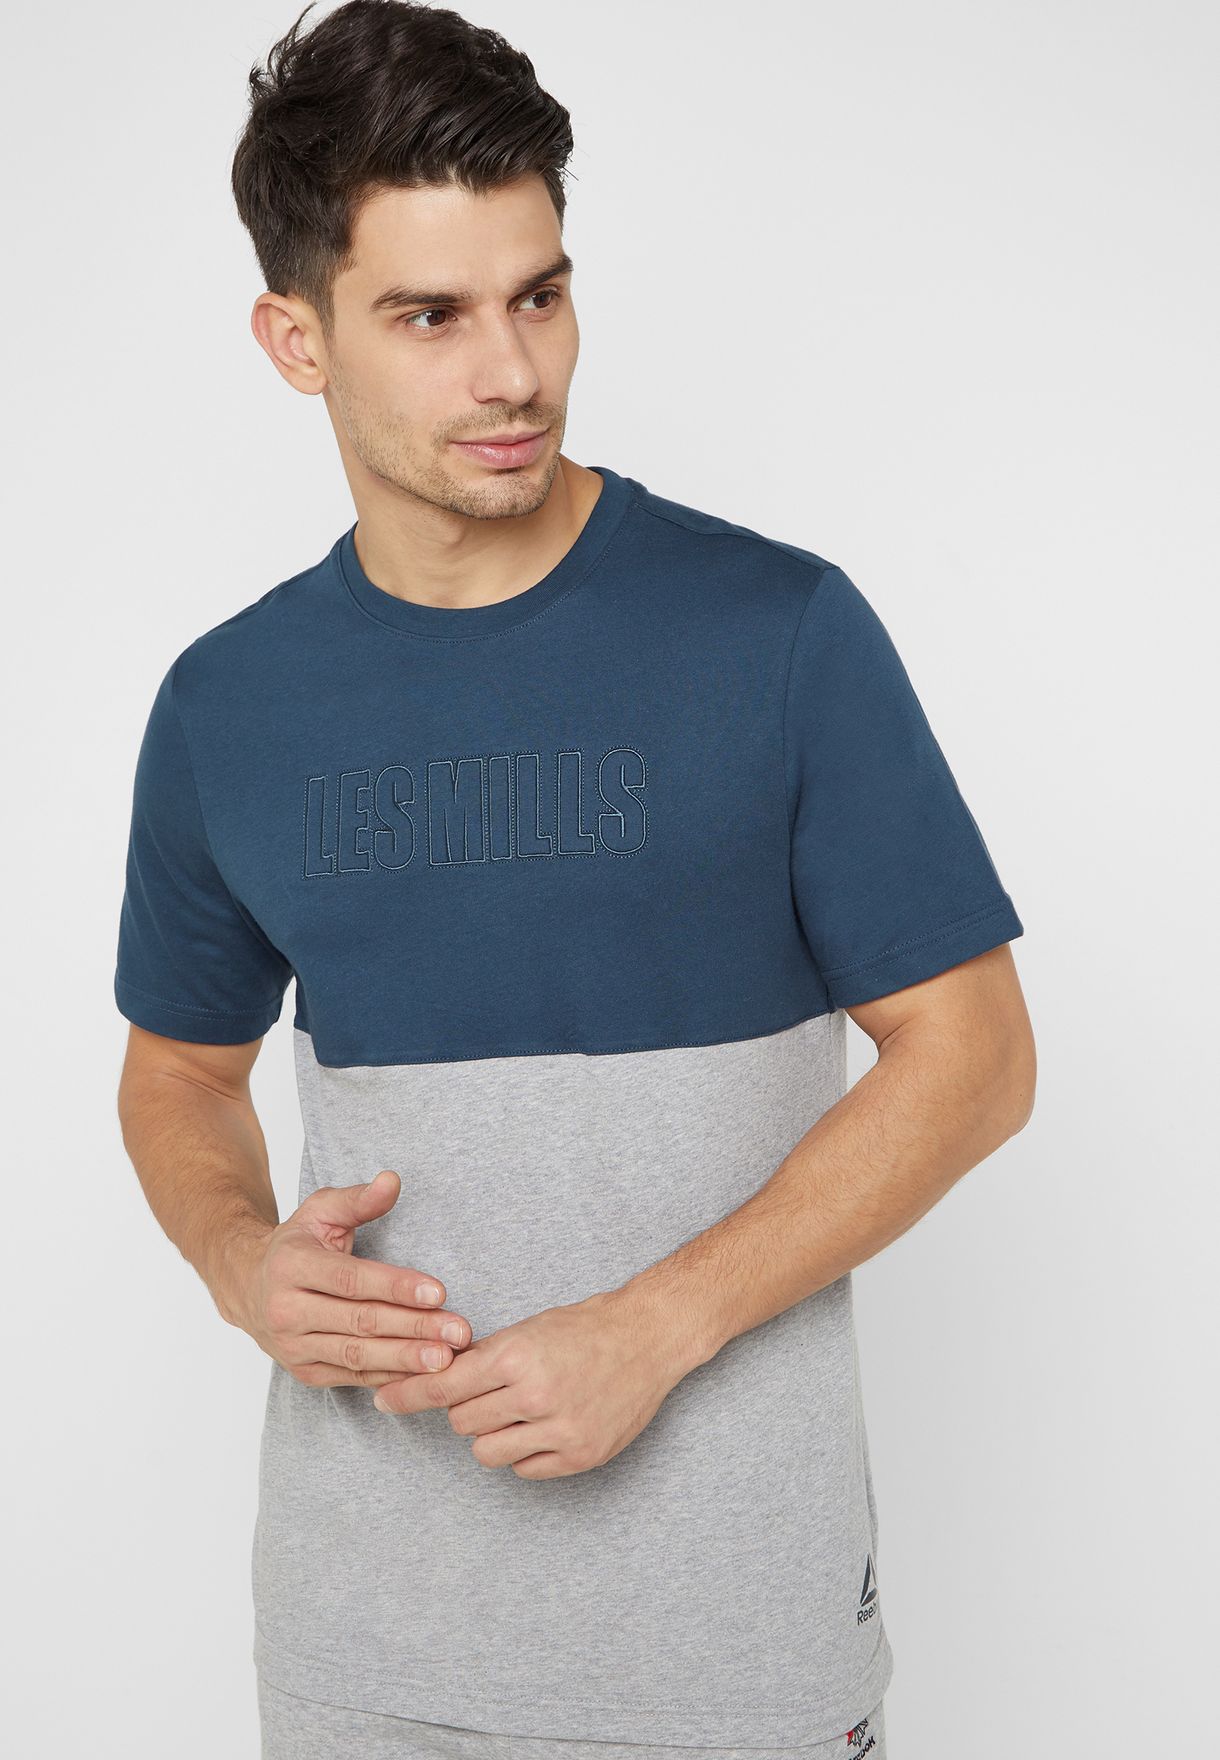 Les Mills T Shirt Image Of Shirt - roblox university guys v neck sunfrog shirts